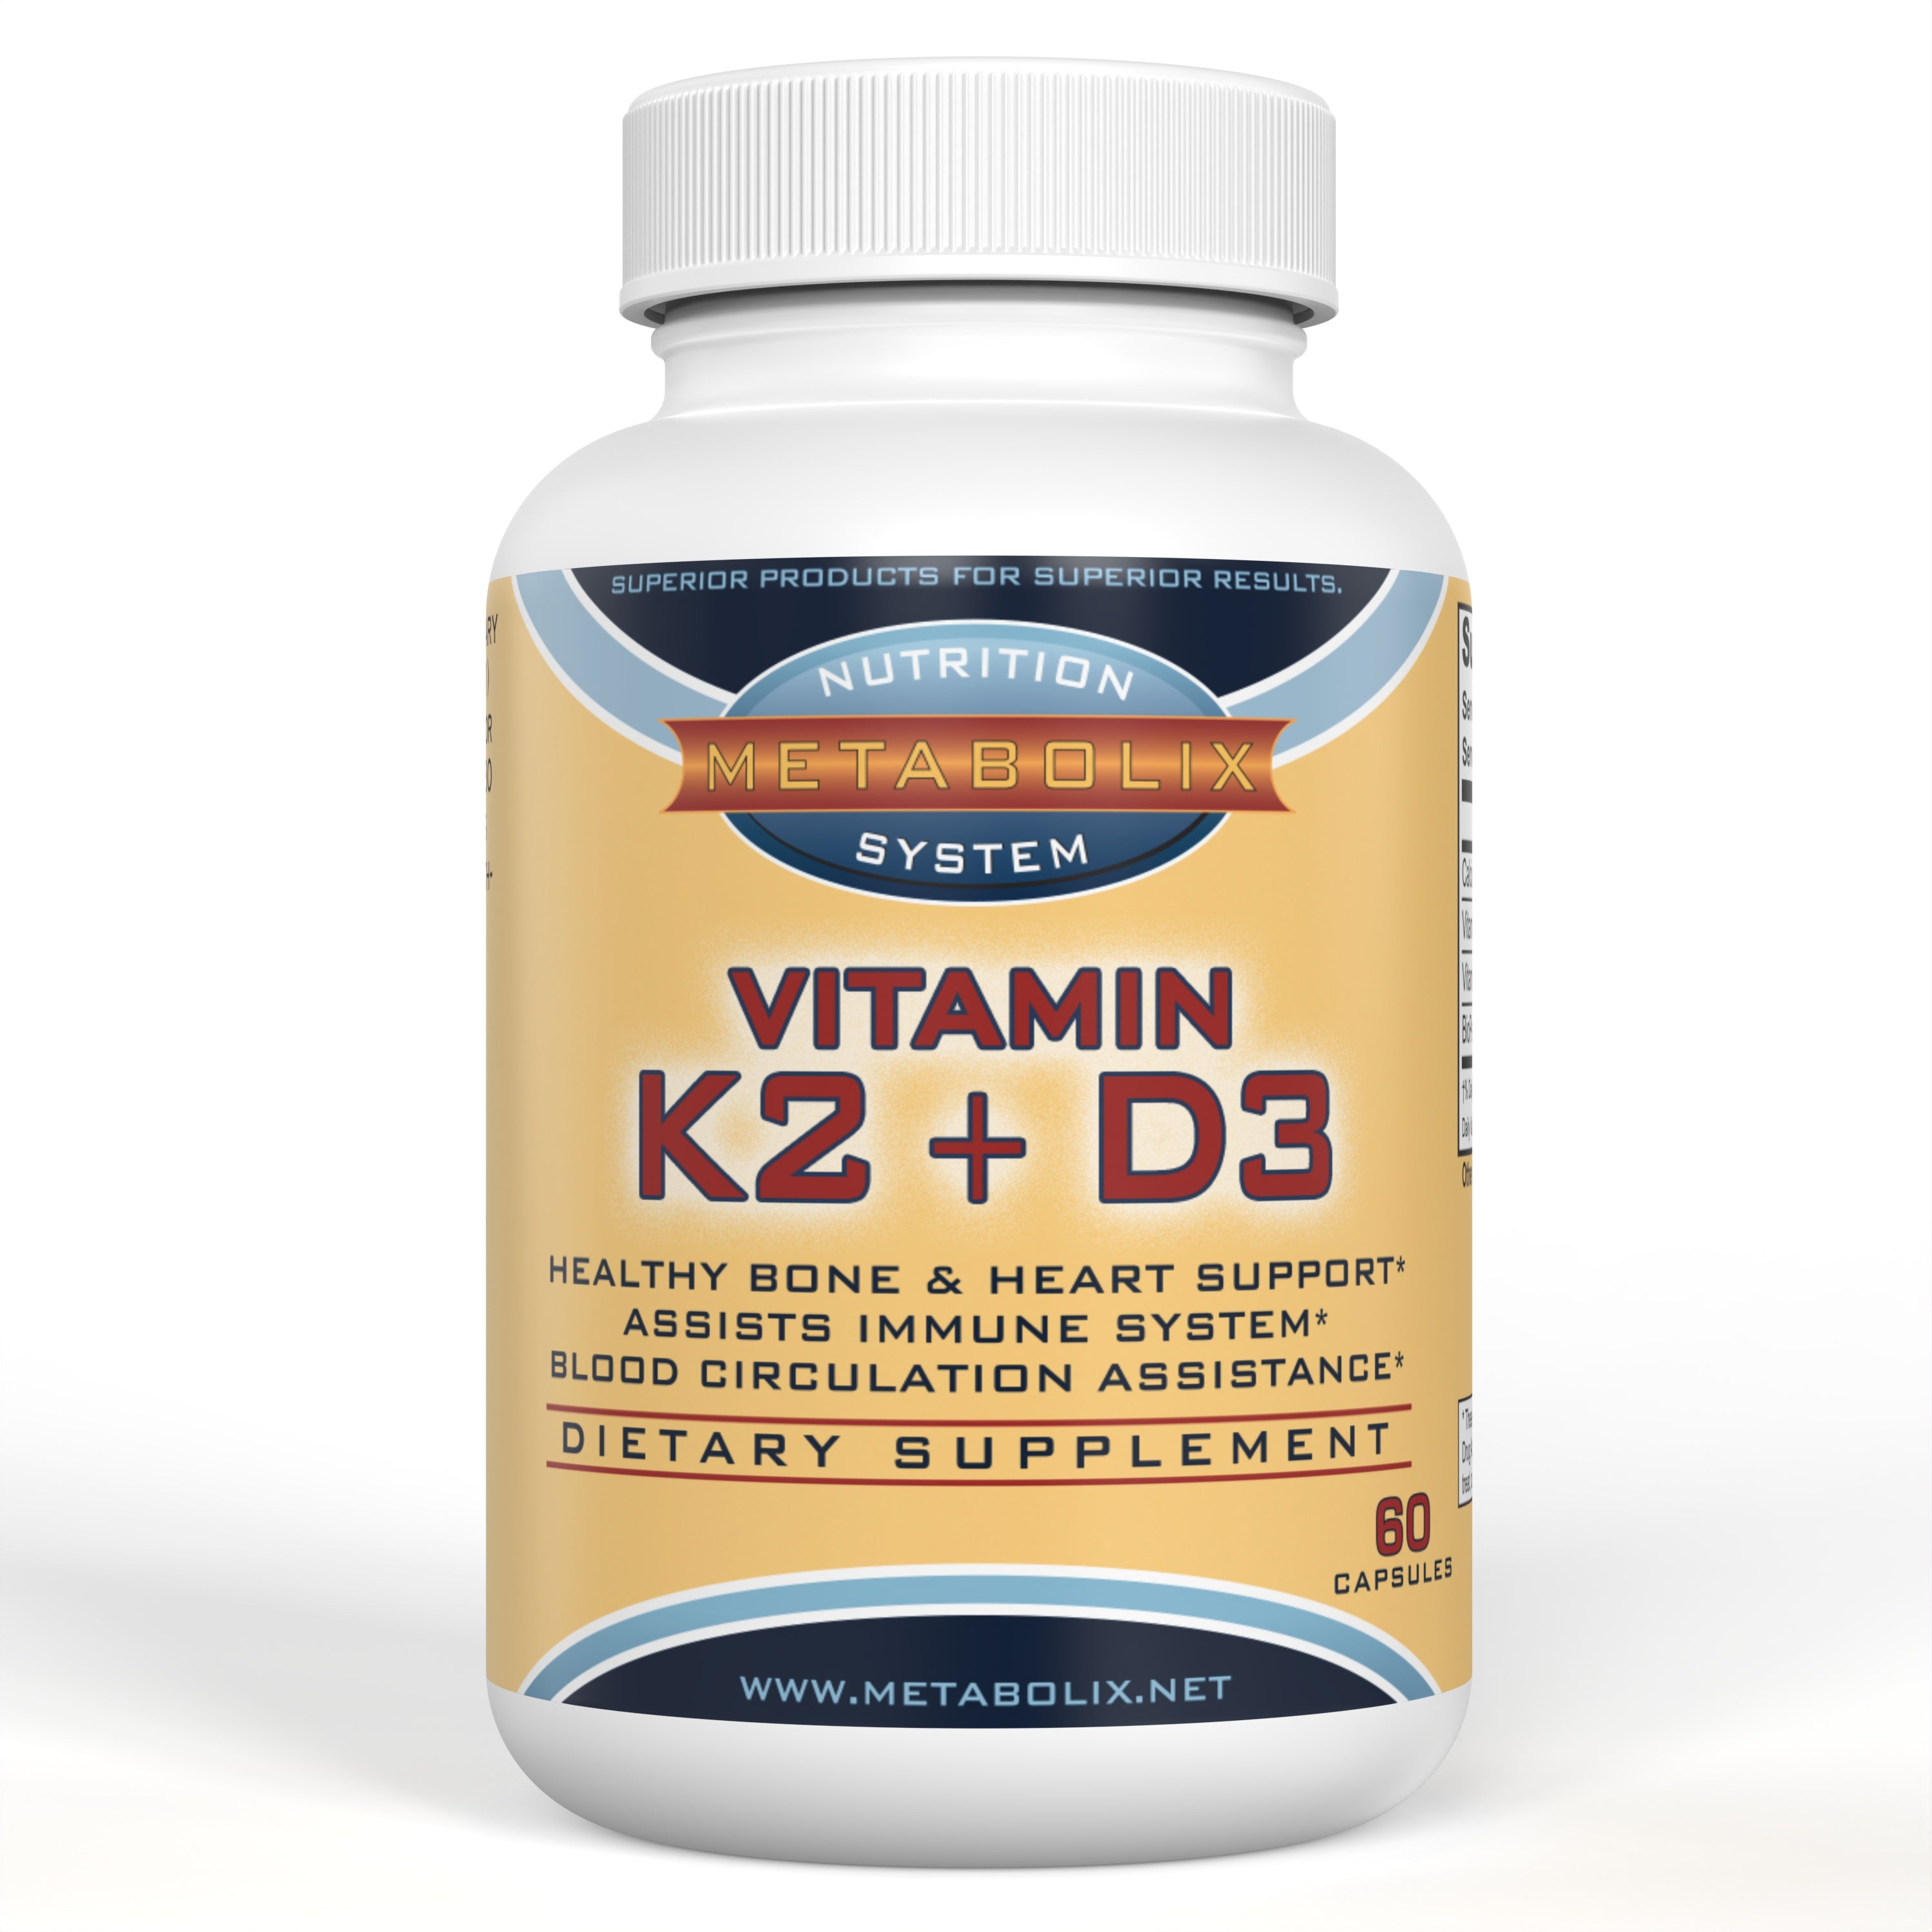 Vitamins K2 + D3